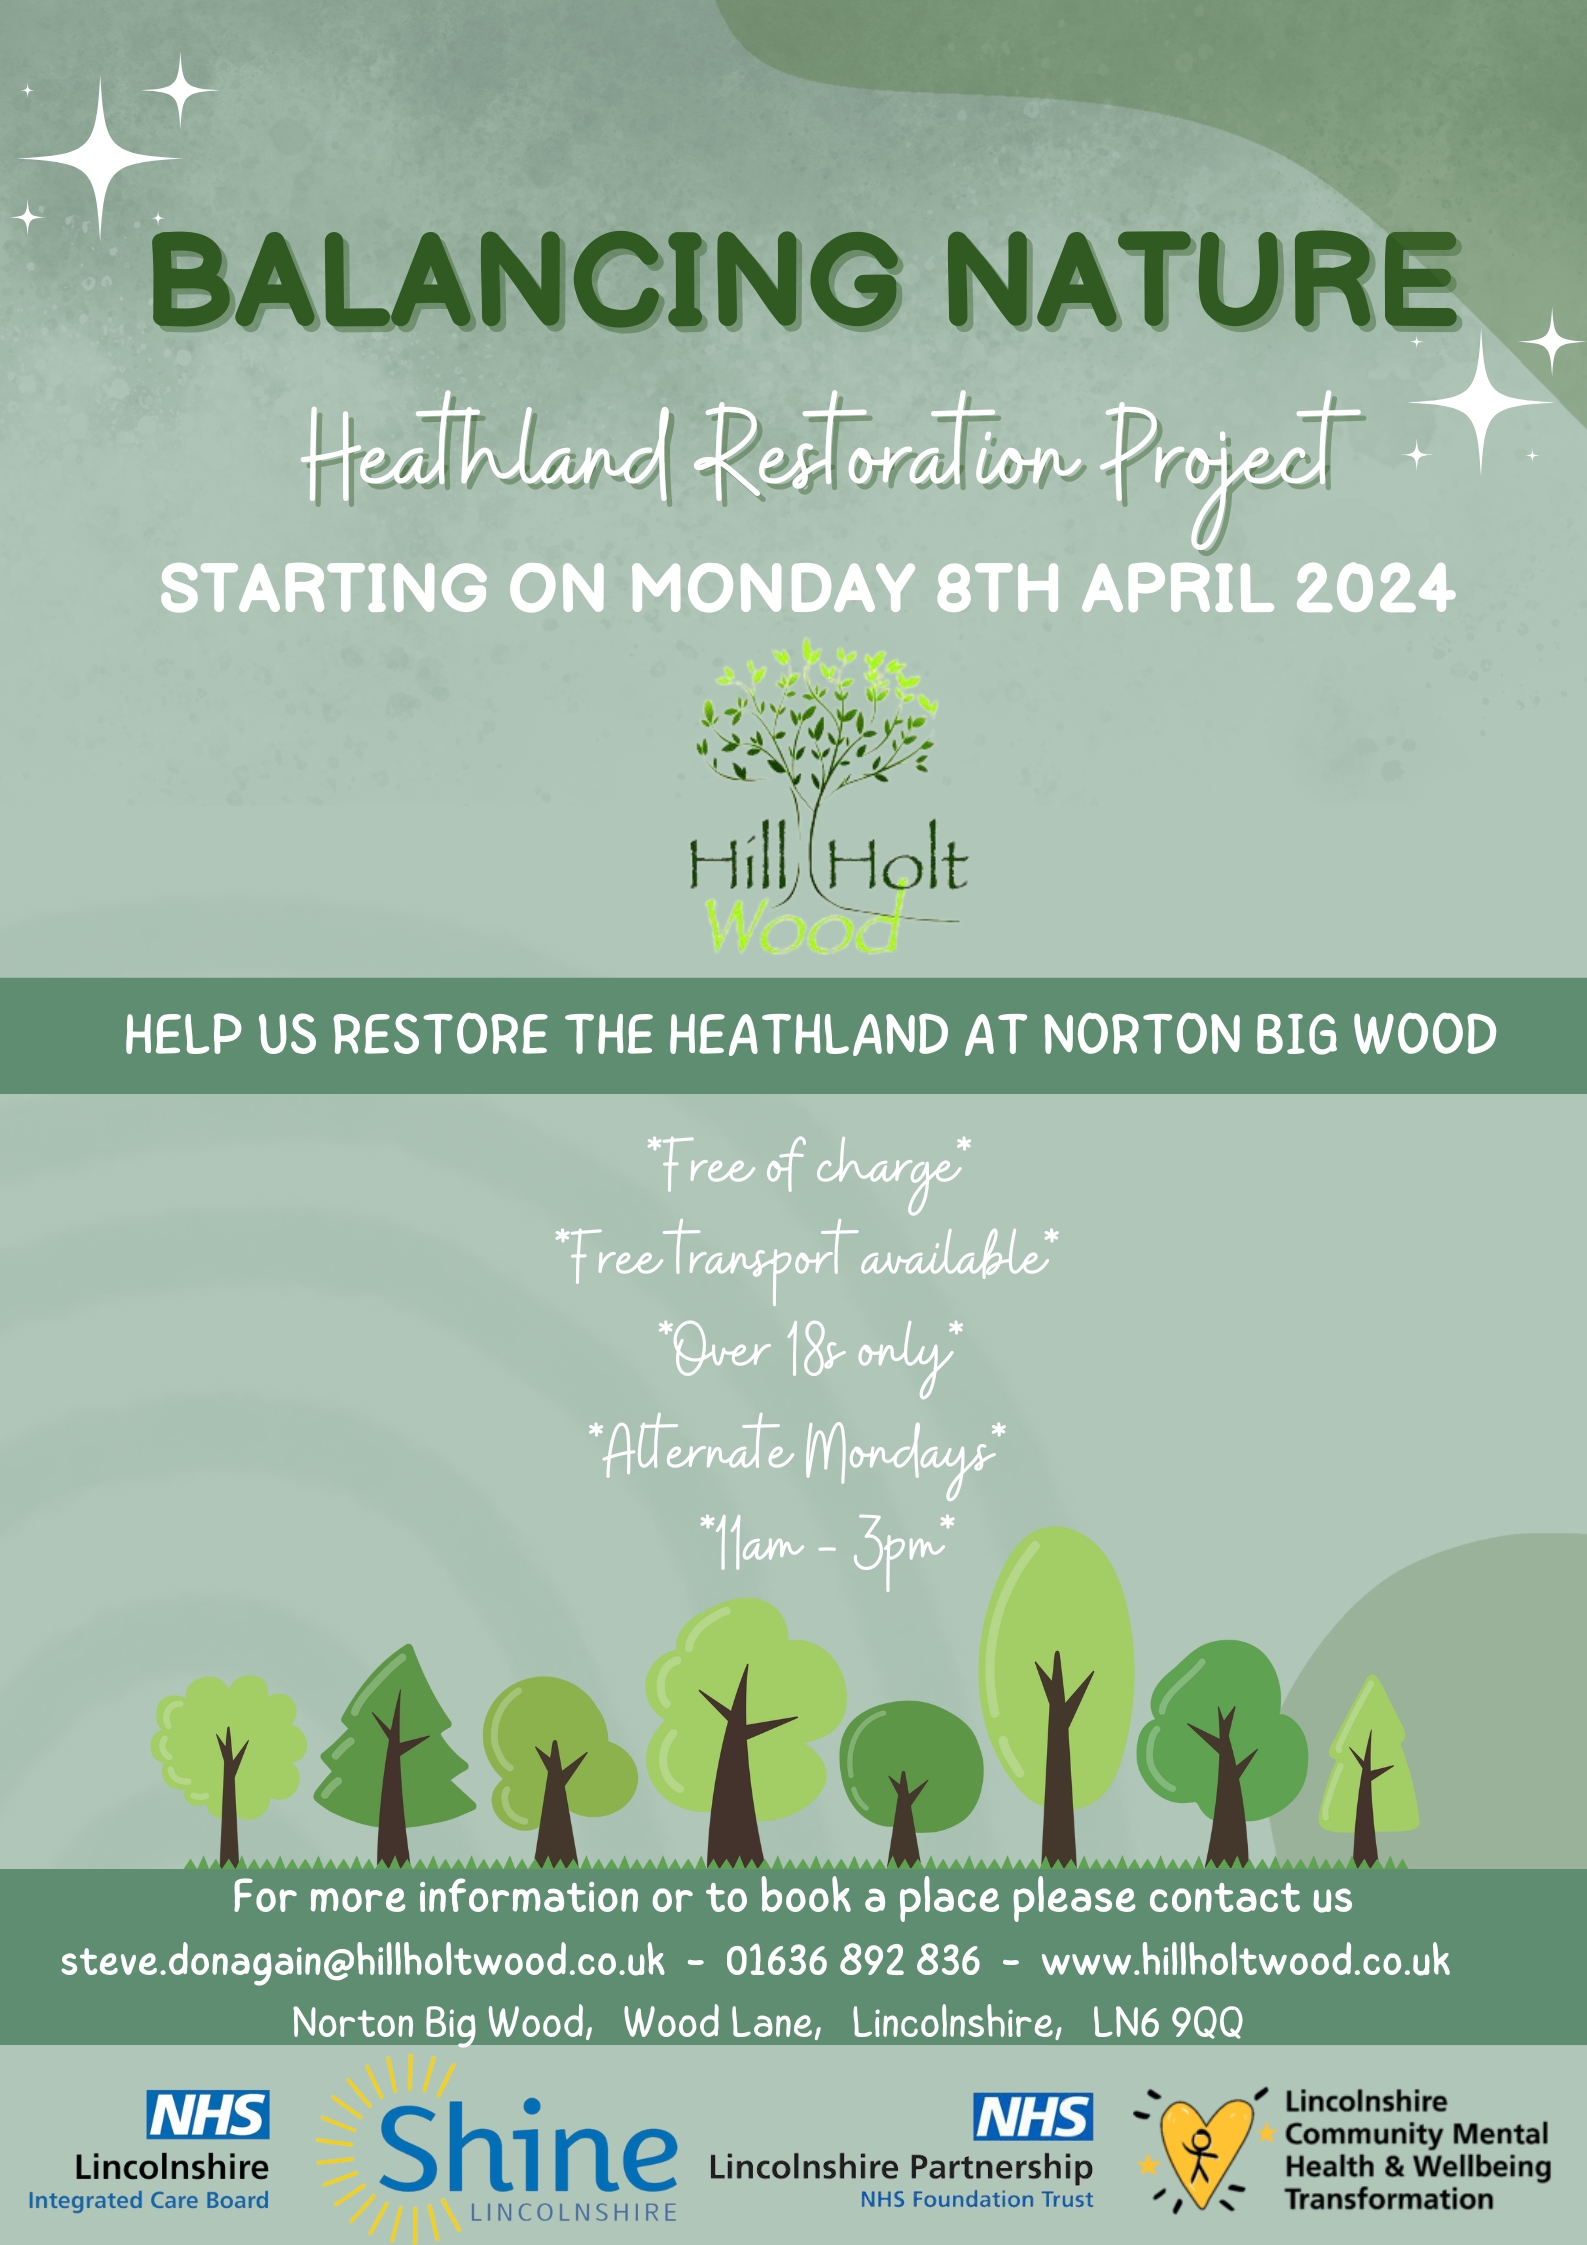 Hill Holt Wood